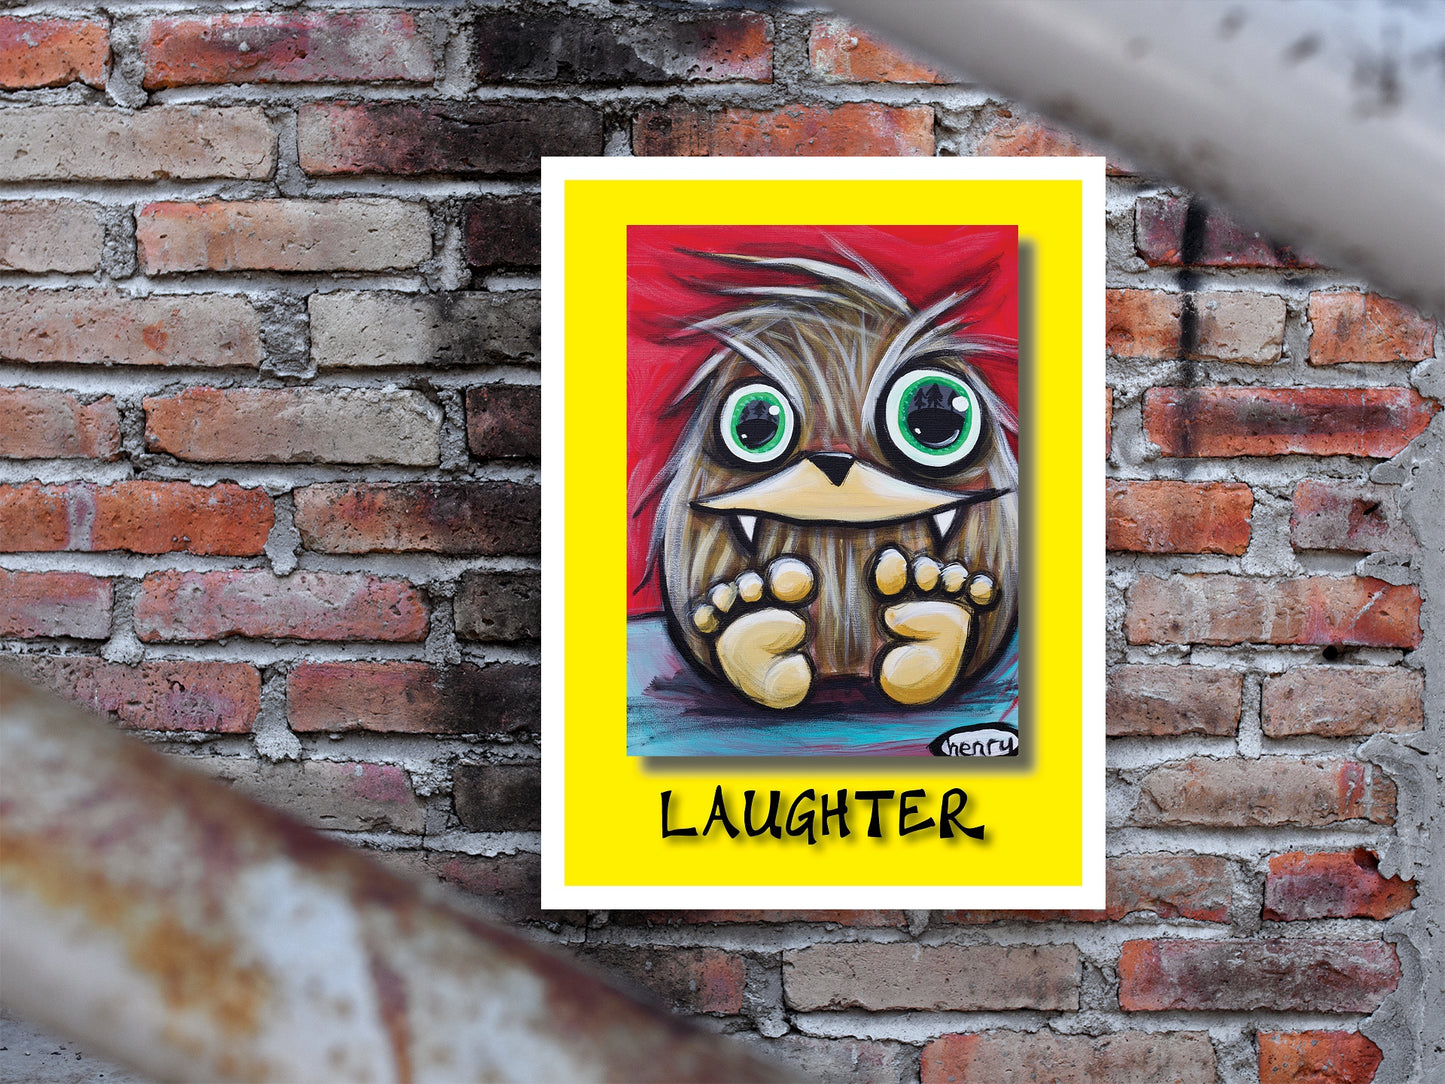 Laughter - A Radical Abundance Poster